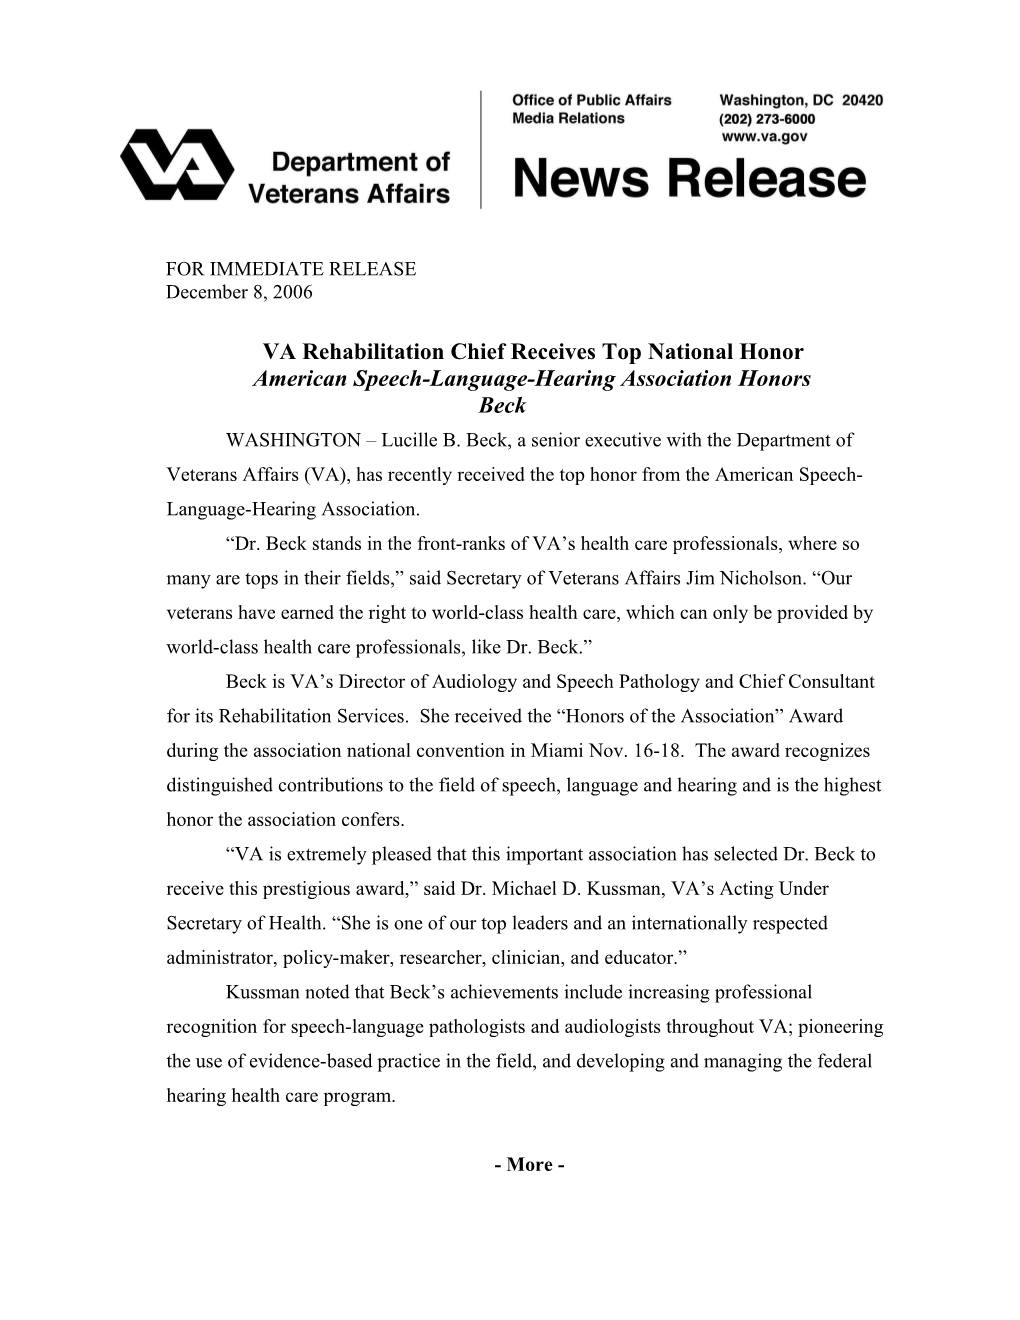 VA Rehabilitation Chief Receives Top National Honor